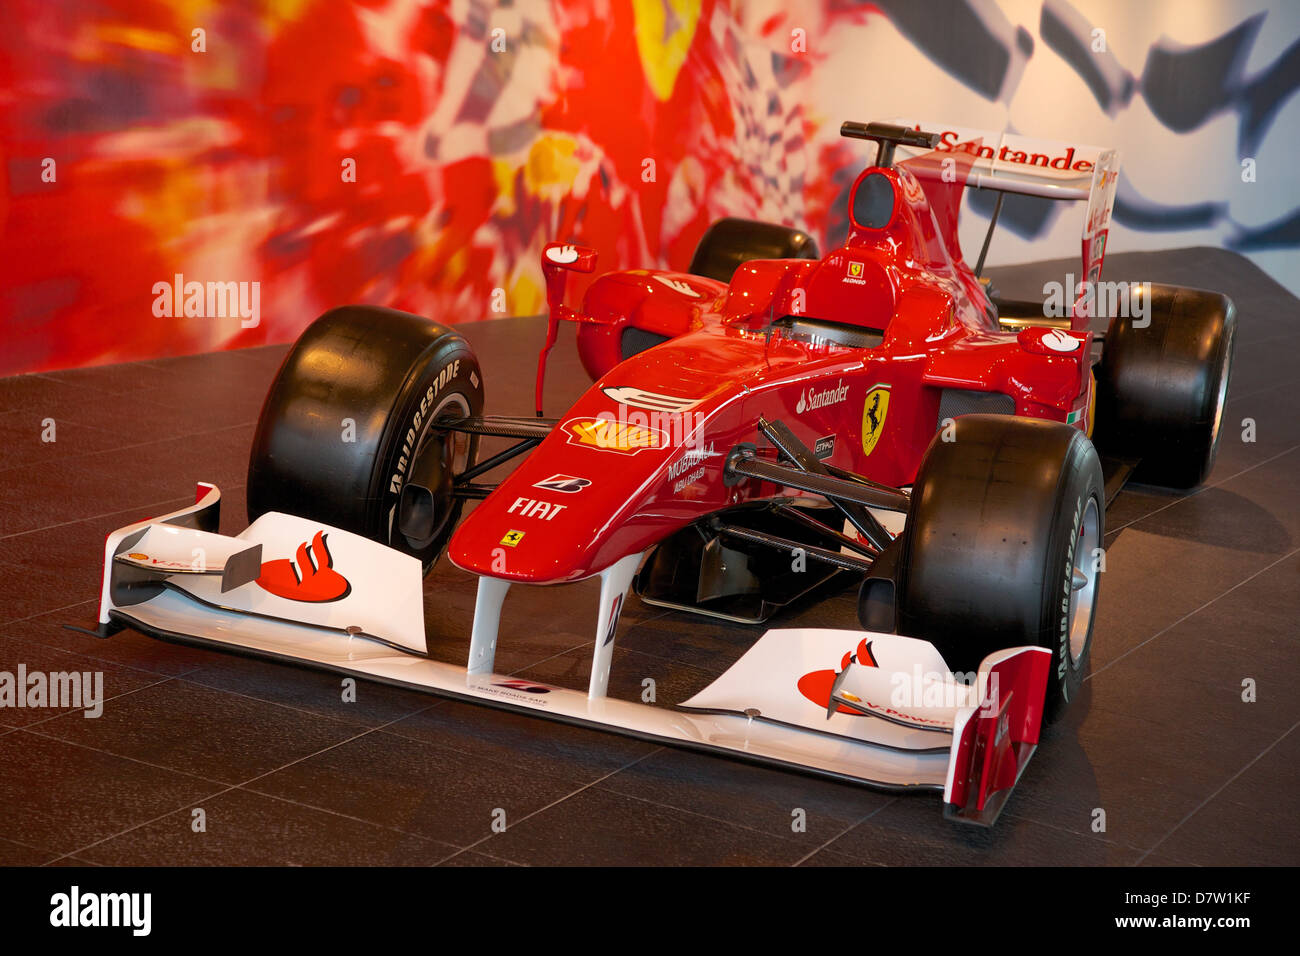 Formula 1 car close up hi-res stock photography and images